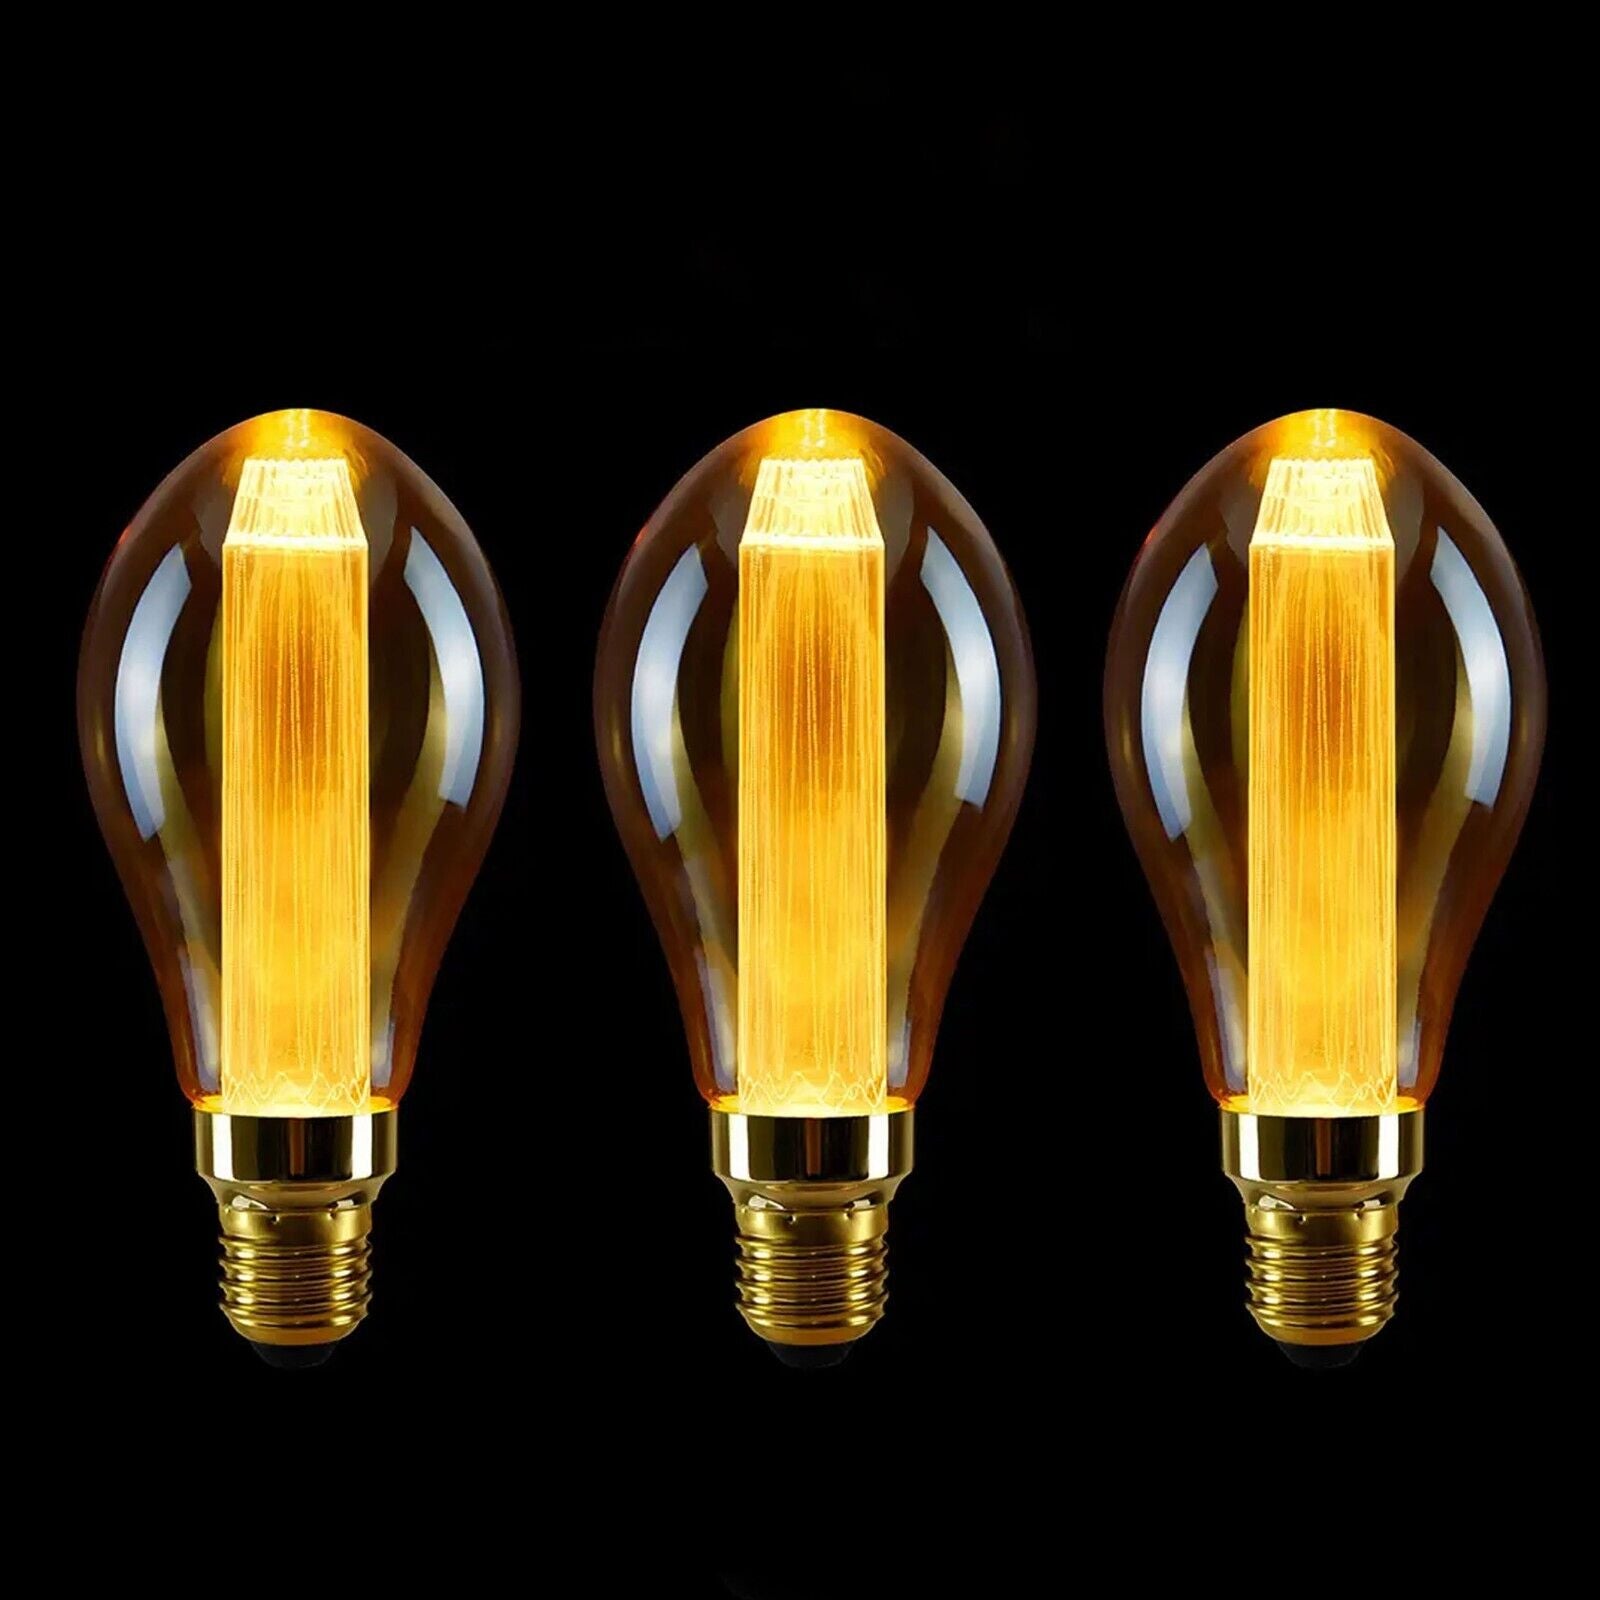 Vintage Filament Edison Light Bulb Non Dimmable E27 Decorative-3 Pack